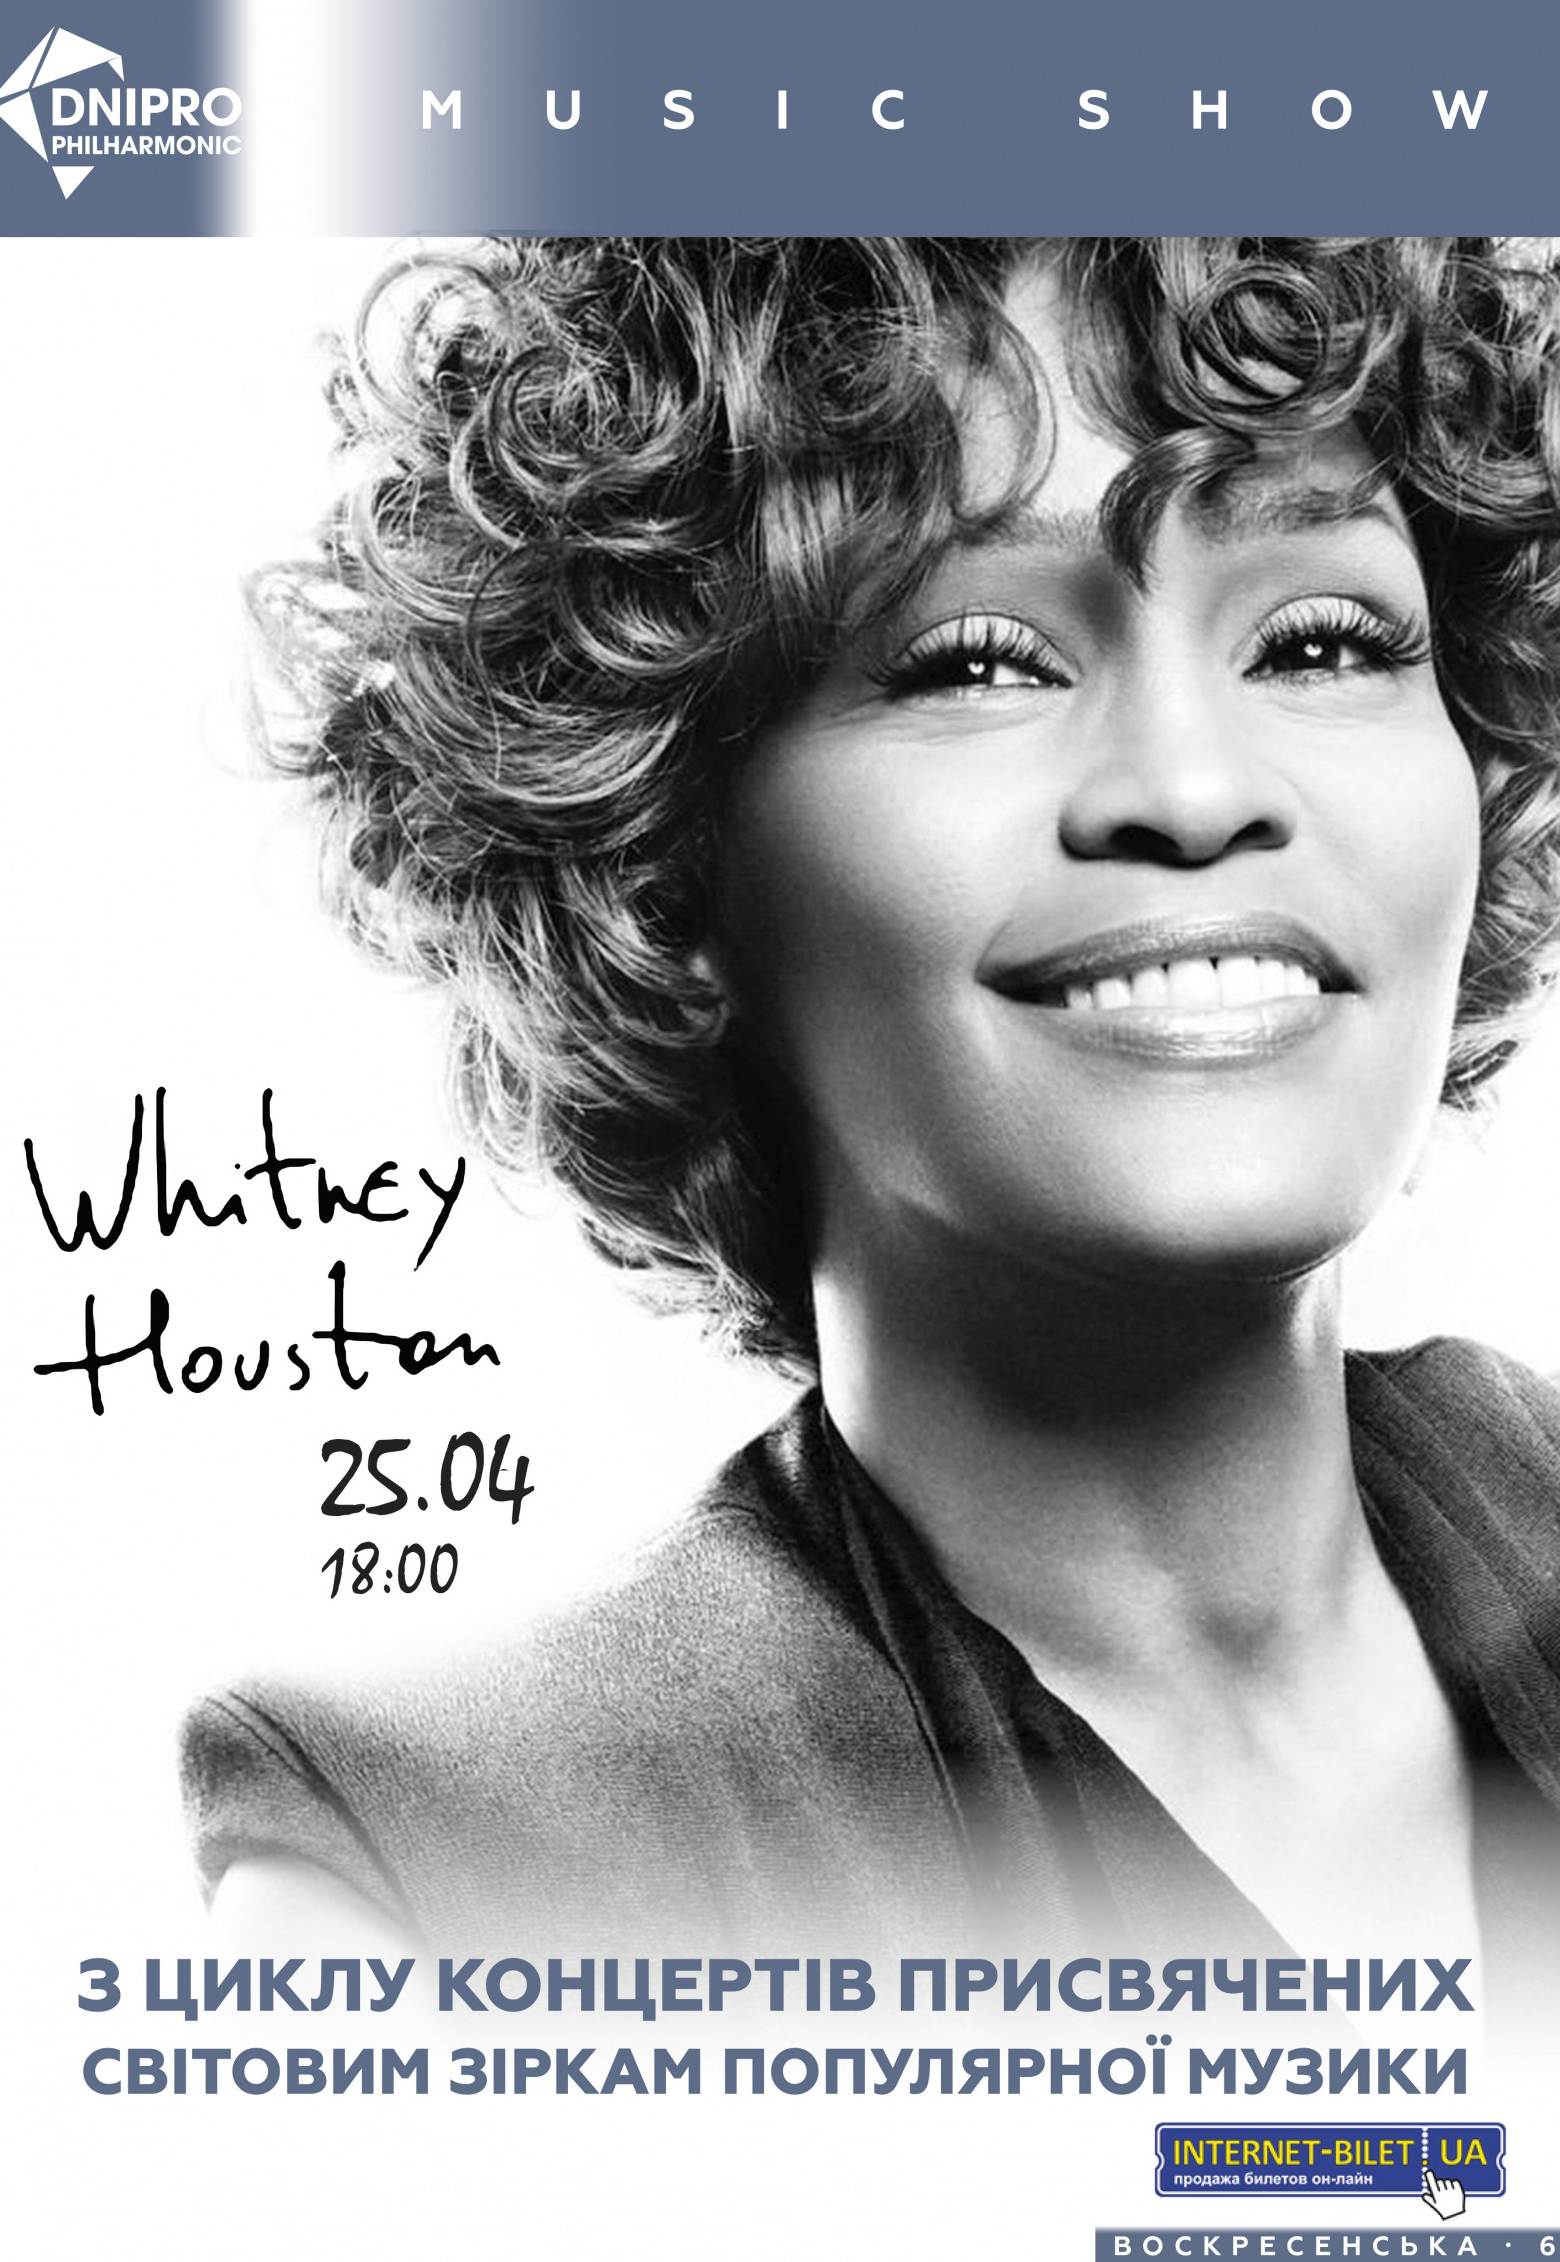 Whitney Houston Днепр, 25.04.2021, купить билеты. Афиша Днепра